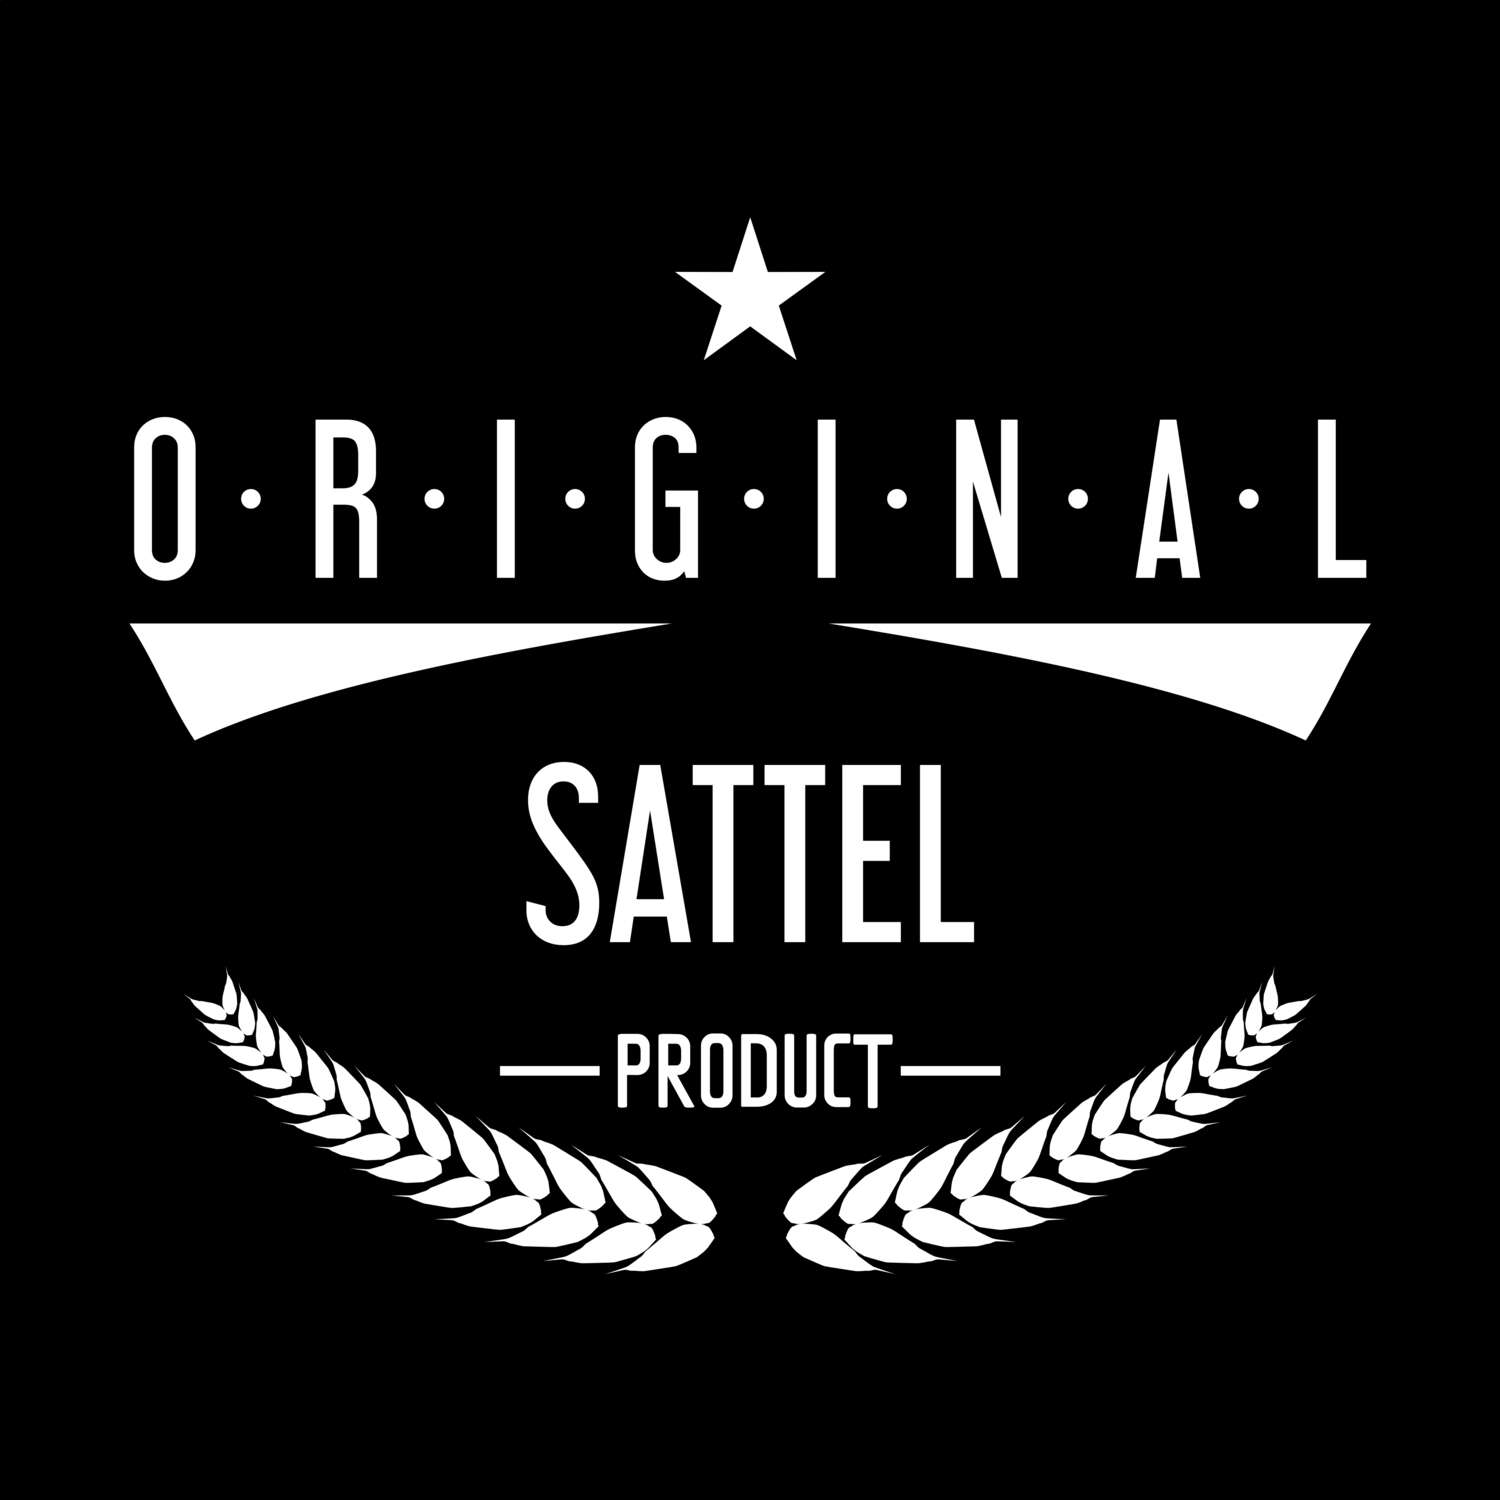 Sattel T-Shirt »Original Product«